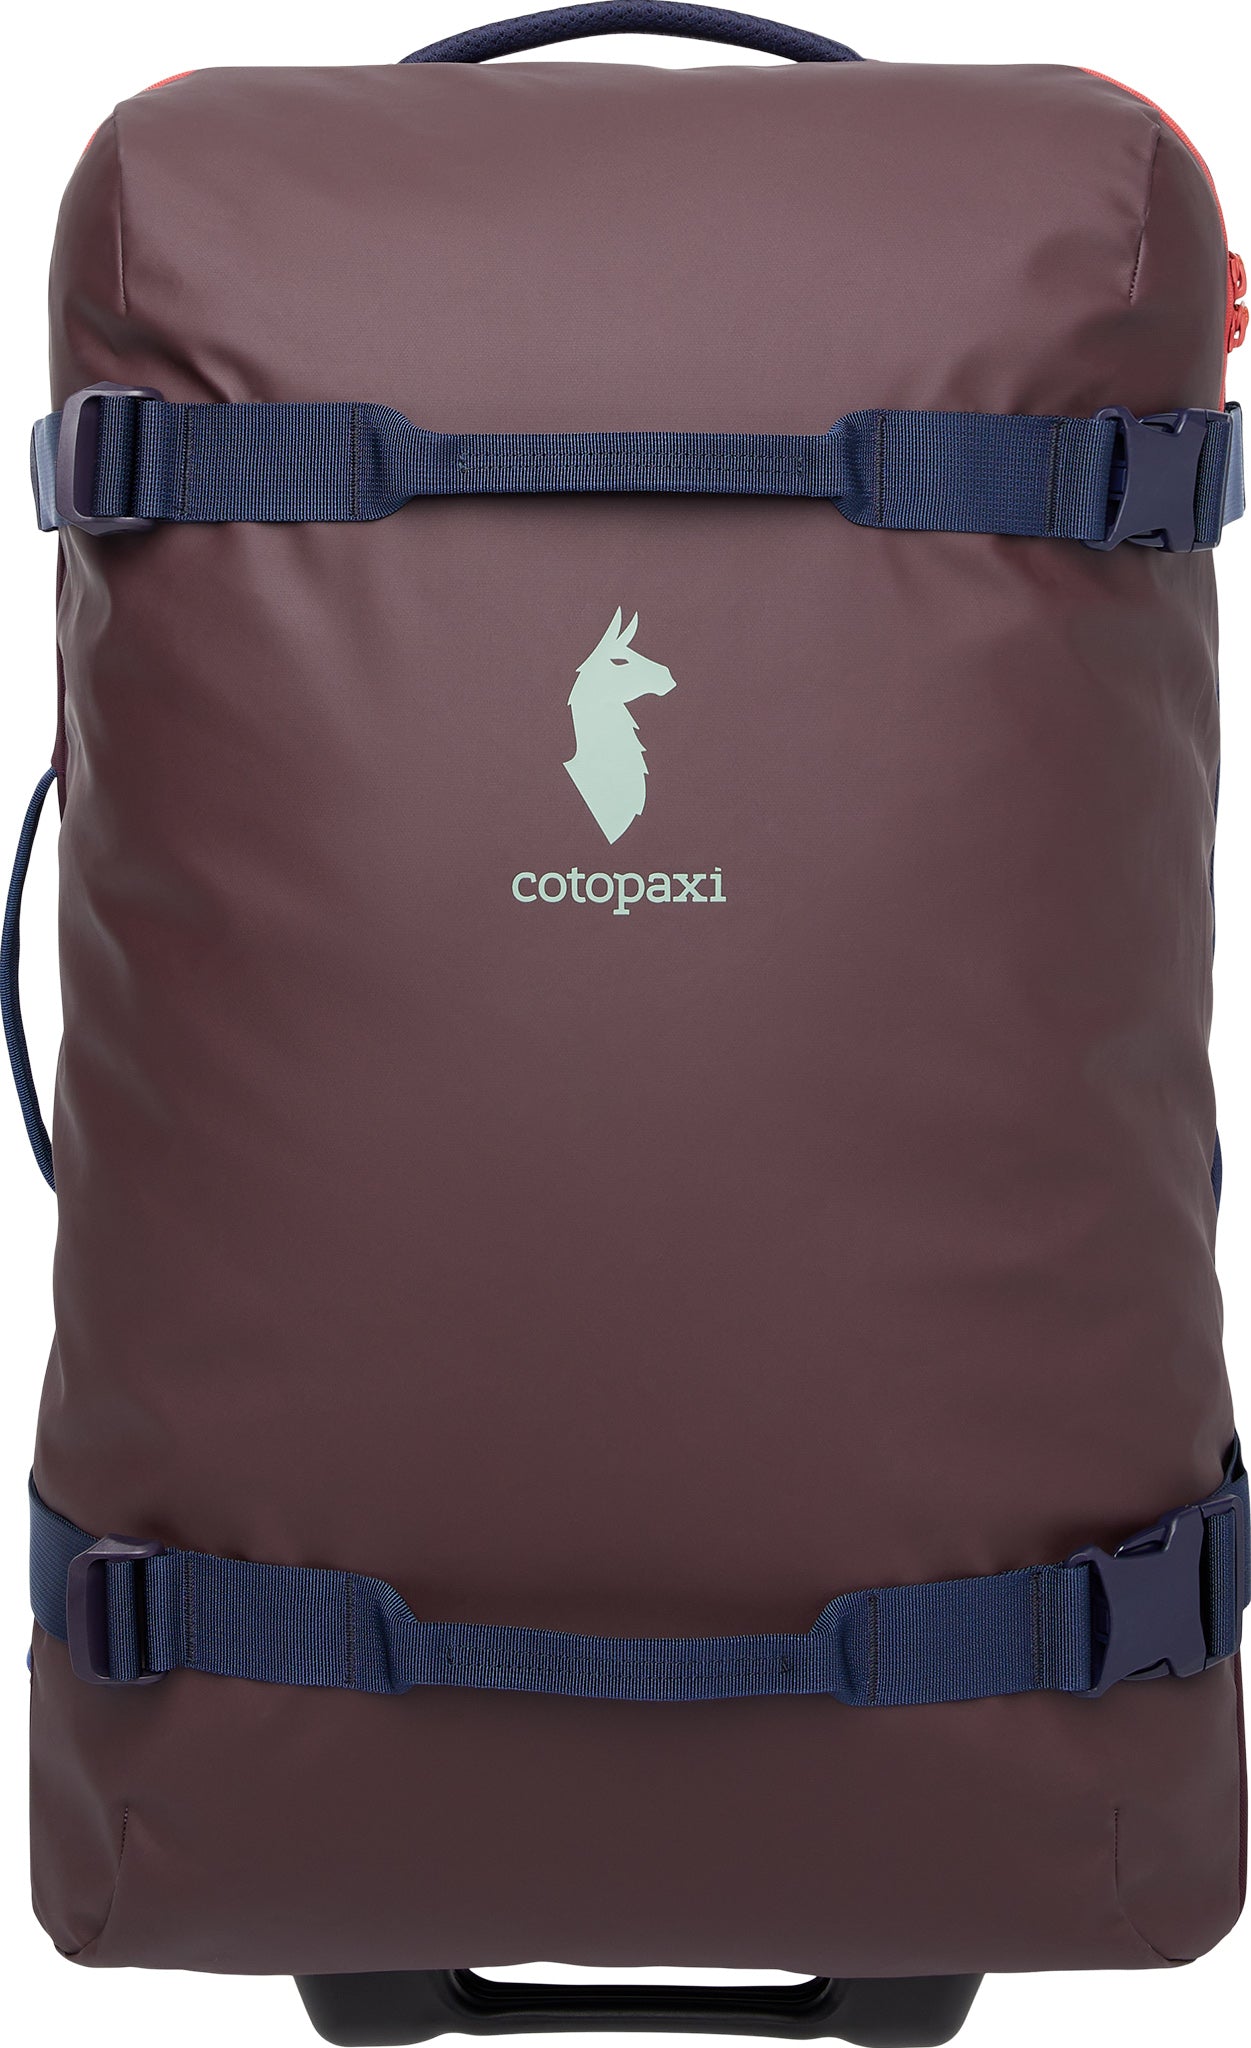 Cotopaxi Allpa Roller Bag 38L - Pacific